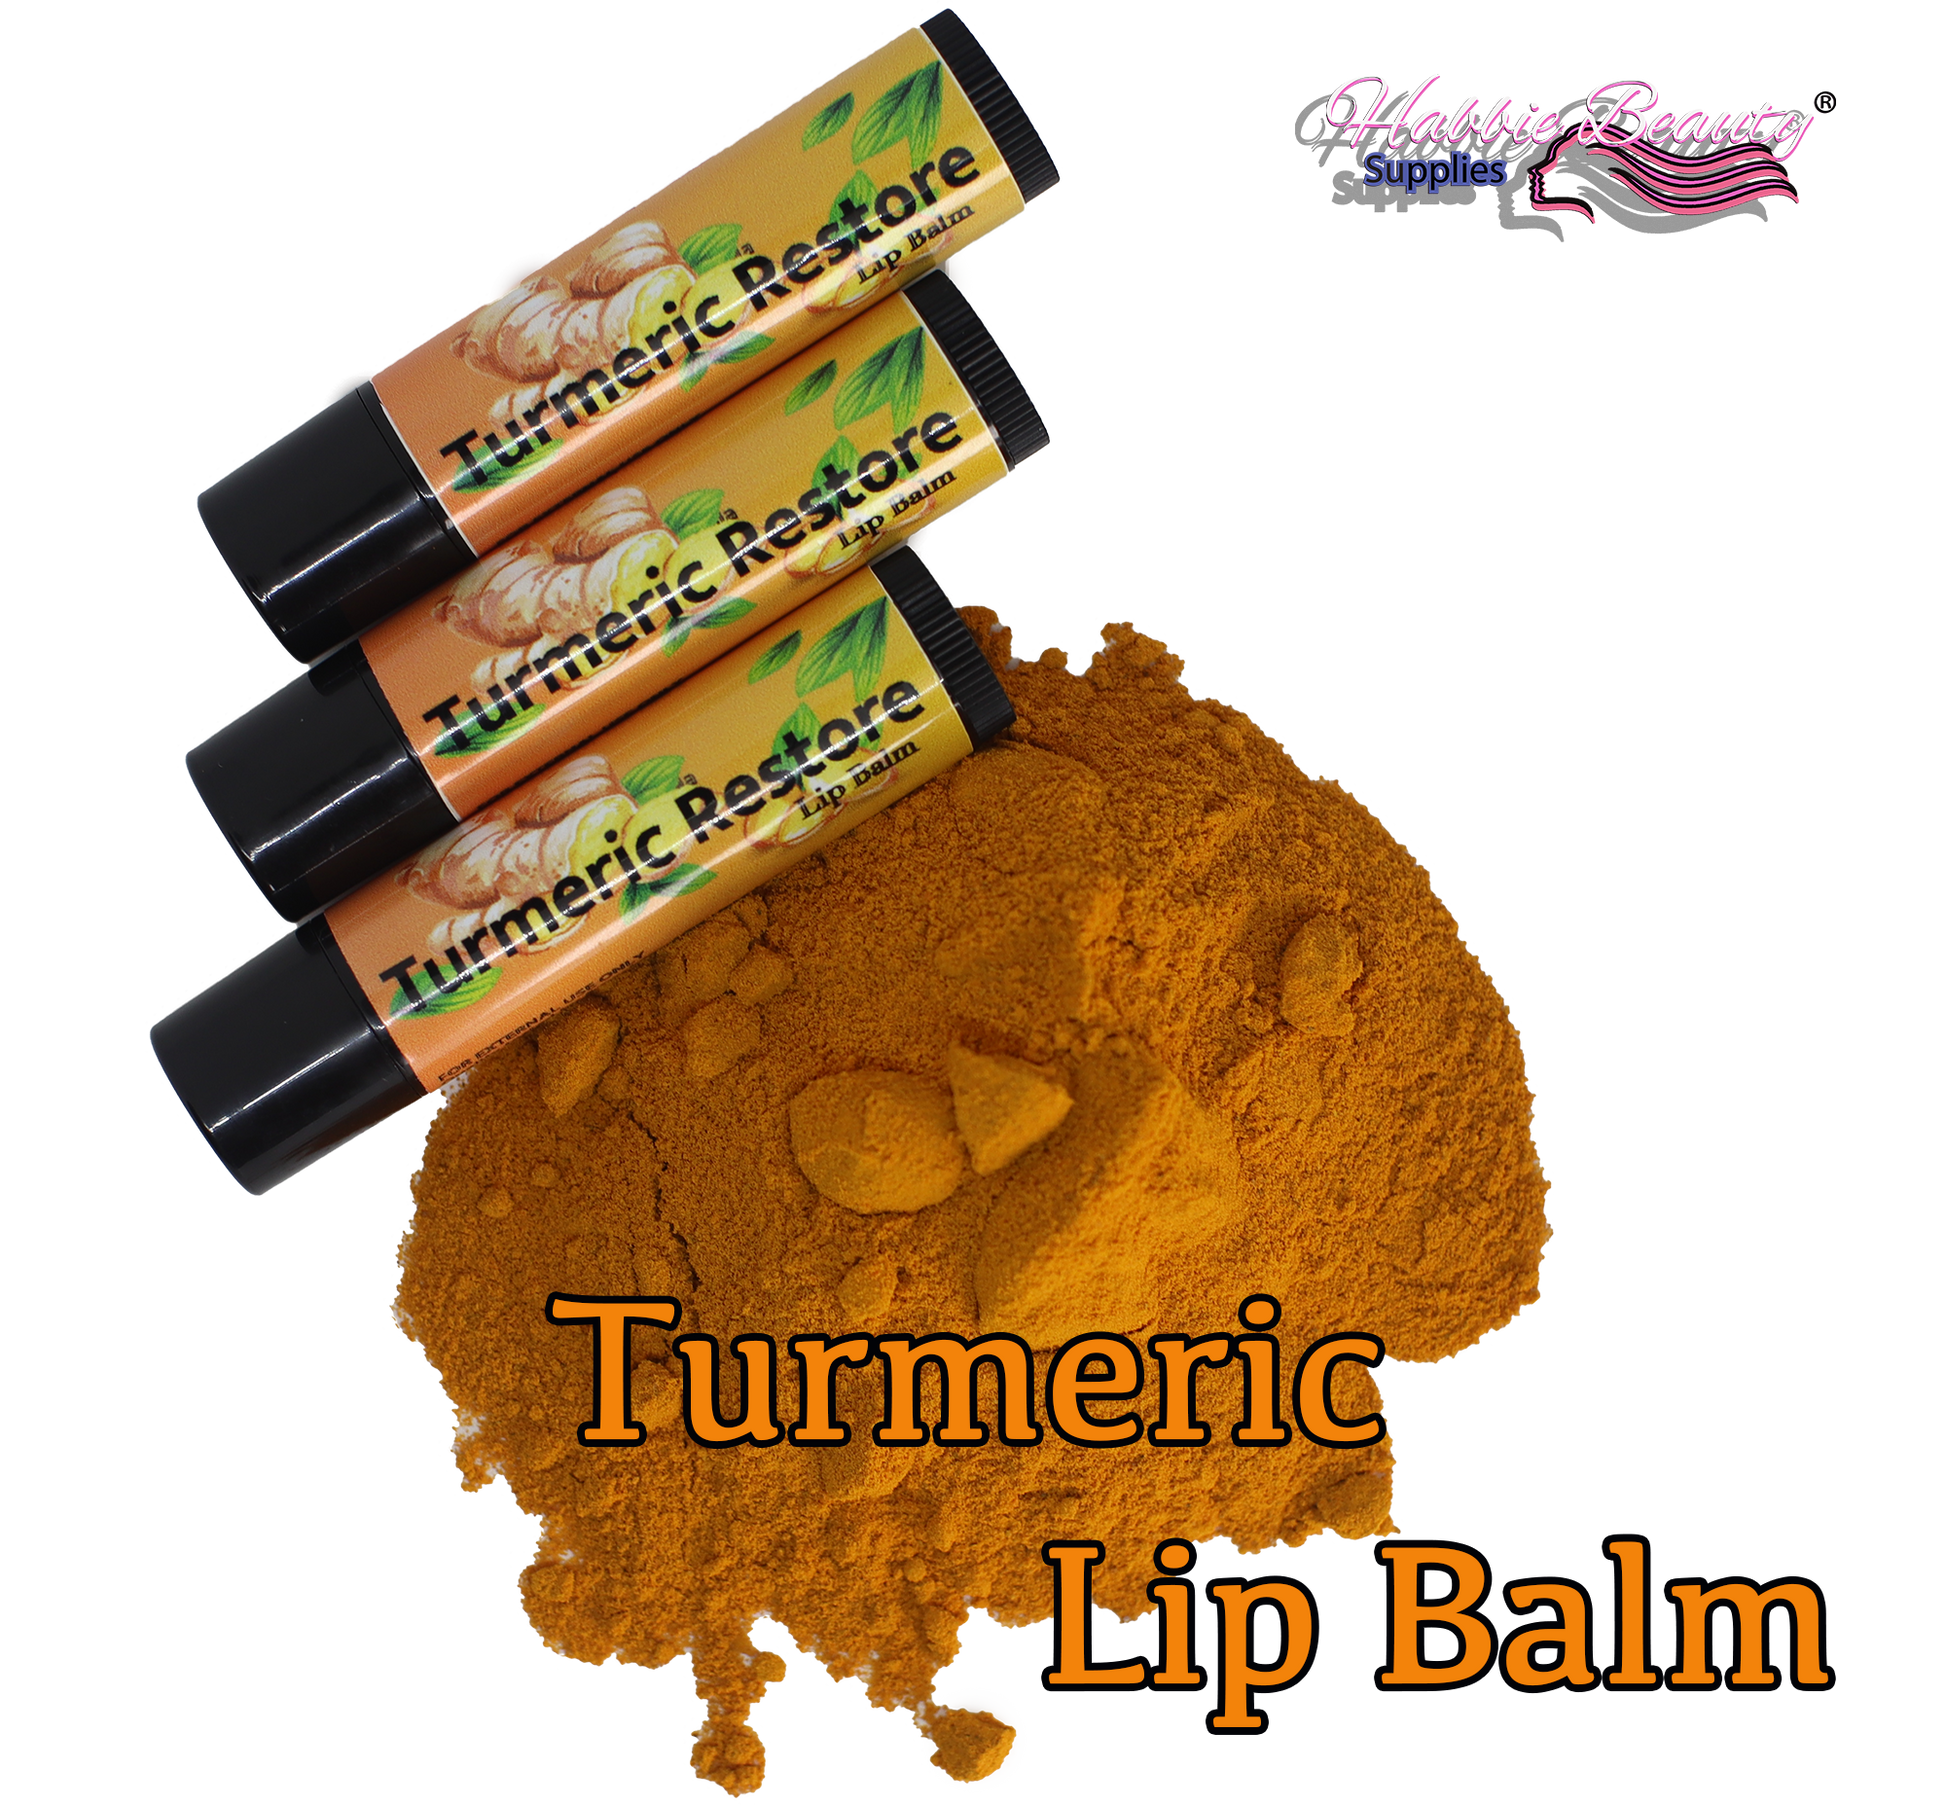 Turmeric Restore Beauty Pack | Turmeric & Hemp Restore | Habbie Beauty Supplies - Habbie Enterprise